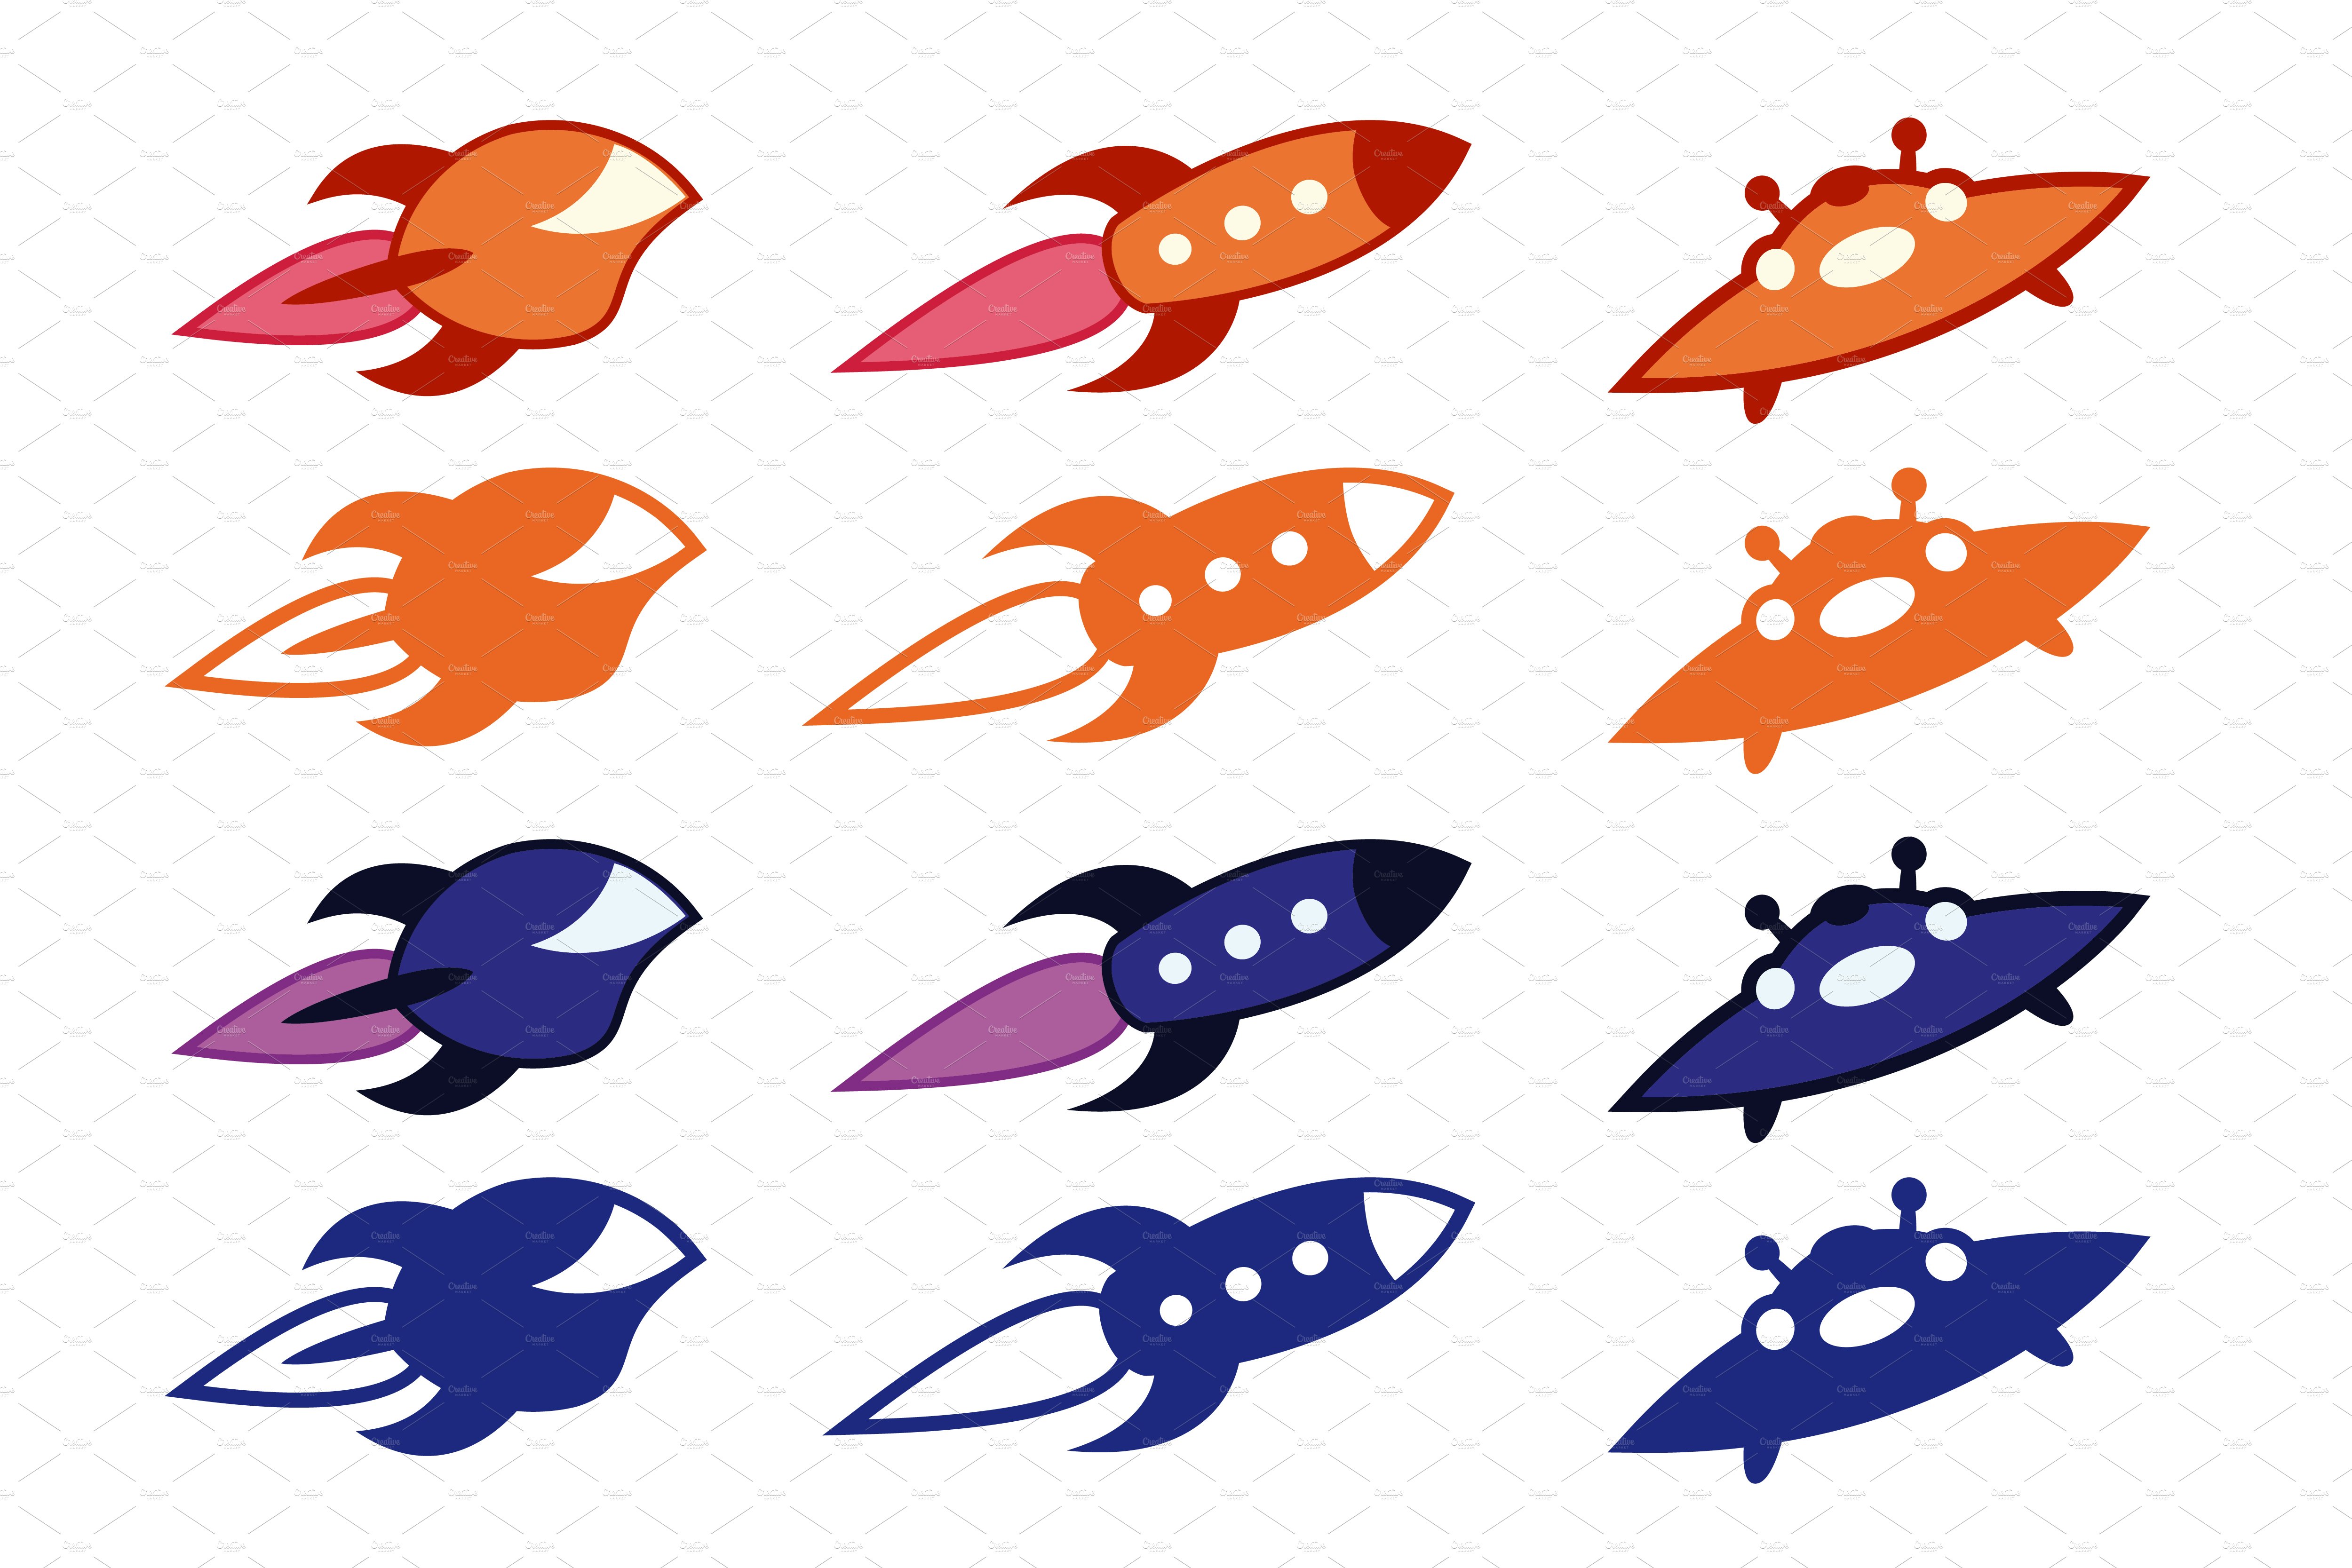 Cartoon spaceships vector icon set cover image.